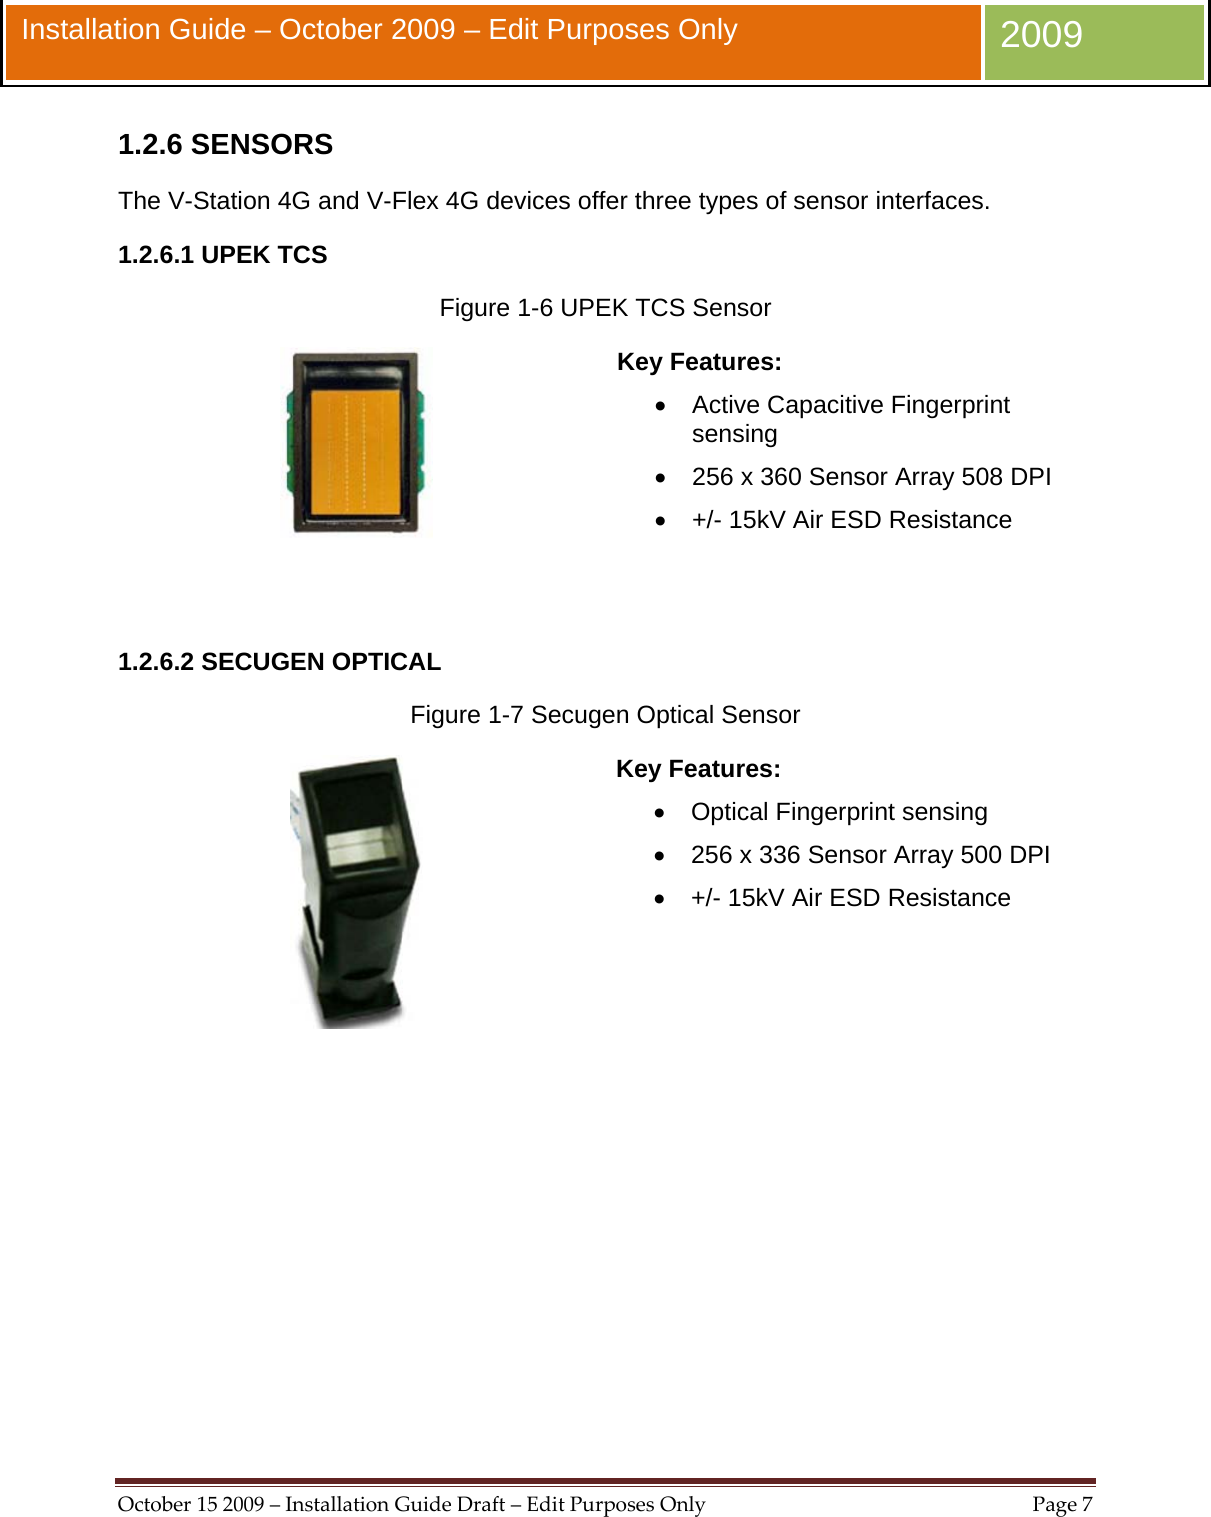  October152009–InstallationGuideDraft–EditPurposesOnlyPage7 Installation Guide – October 2009 – Edit Purposes Only  2009 1.2.6 SENSORS The V-Station 4G and V-Flex 4G devices offer three types of sensor interfaces. 1.2.6.1 UPEK TCS Figure 1-6 UPEK TCS Sensor  Key Features: •  Active Capacitive Fingerprint sensing •  256 x 360 Sensor Array 508 DPI •  +/- 15kV Air ESD Resistance   1.2.6.2 SECUGEN OPTICAL Figure 1-7 Secugen Optical Sensor  Key Features: •  Optical Fingerprint sensing •  256 x 336 Sensor Array 500 DPI •  +/- 15kV Air ESD Resistance   